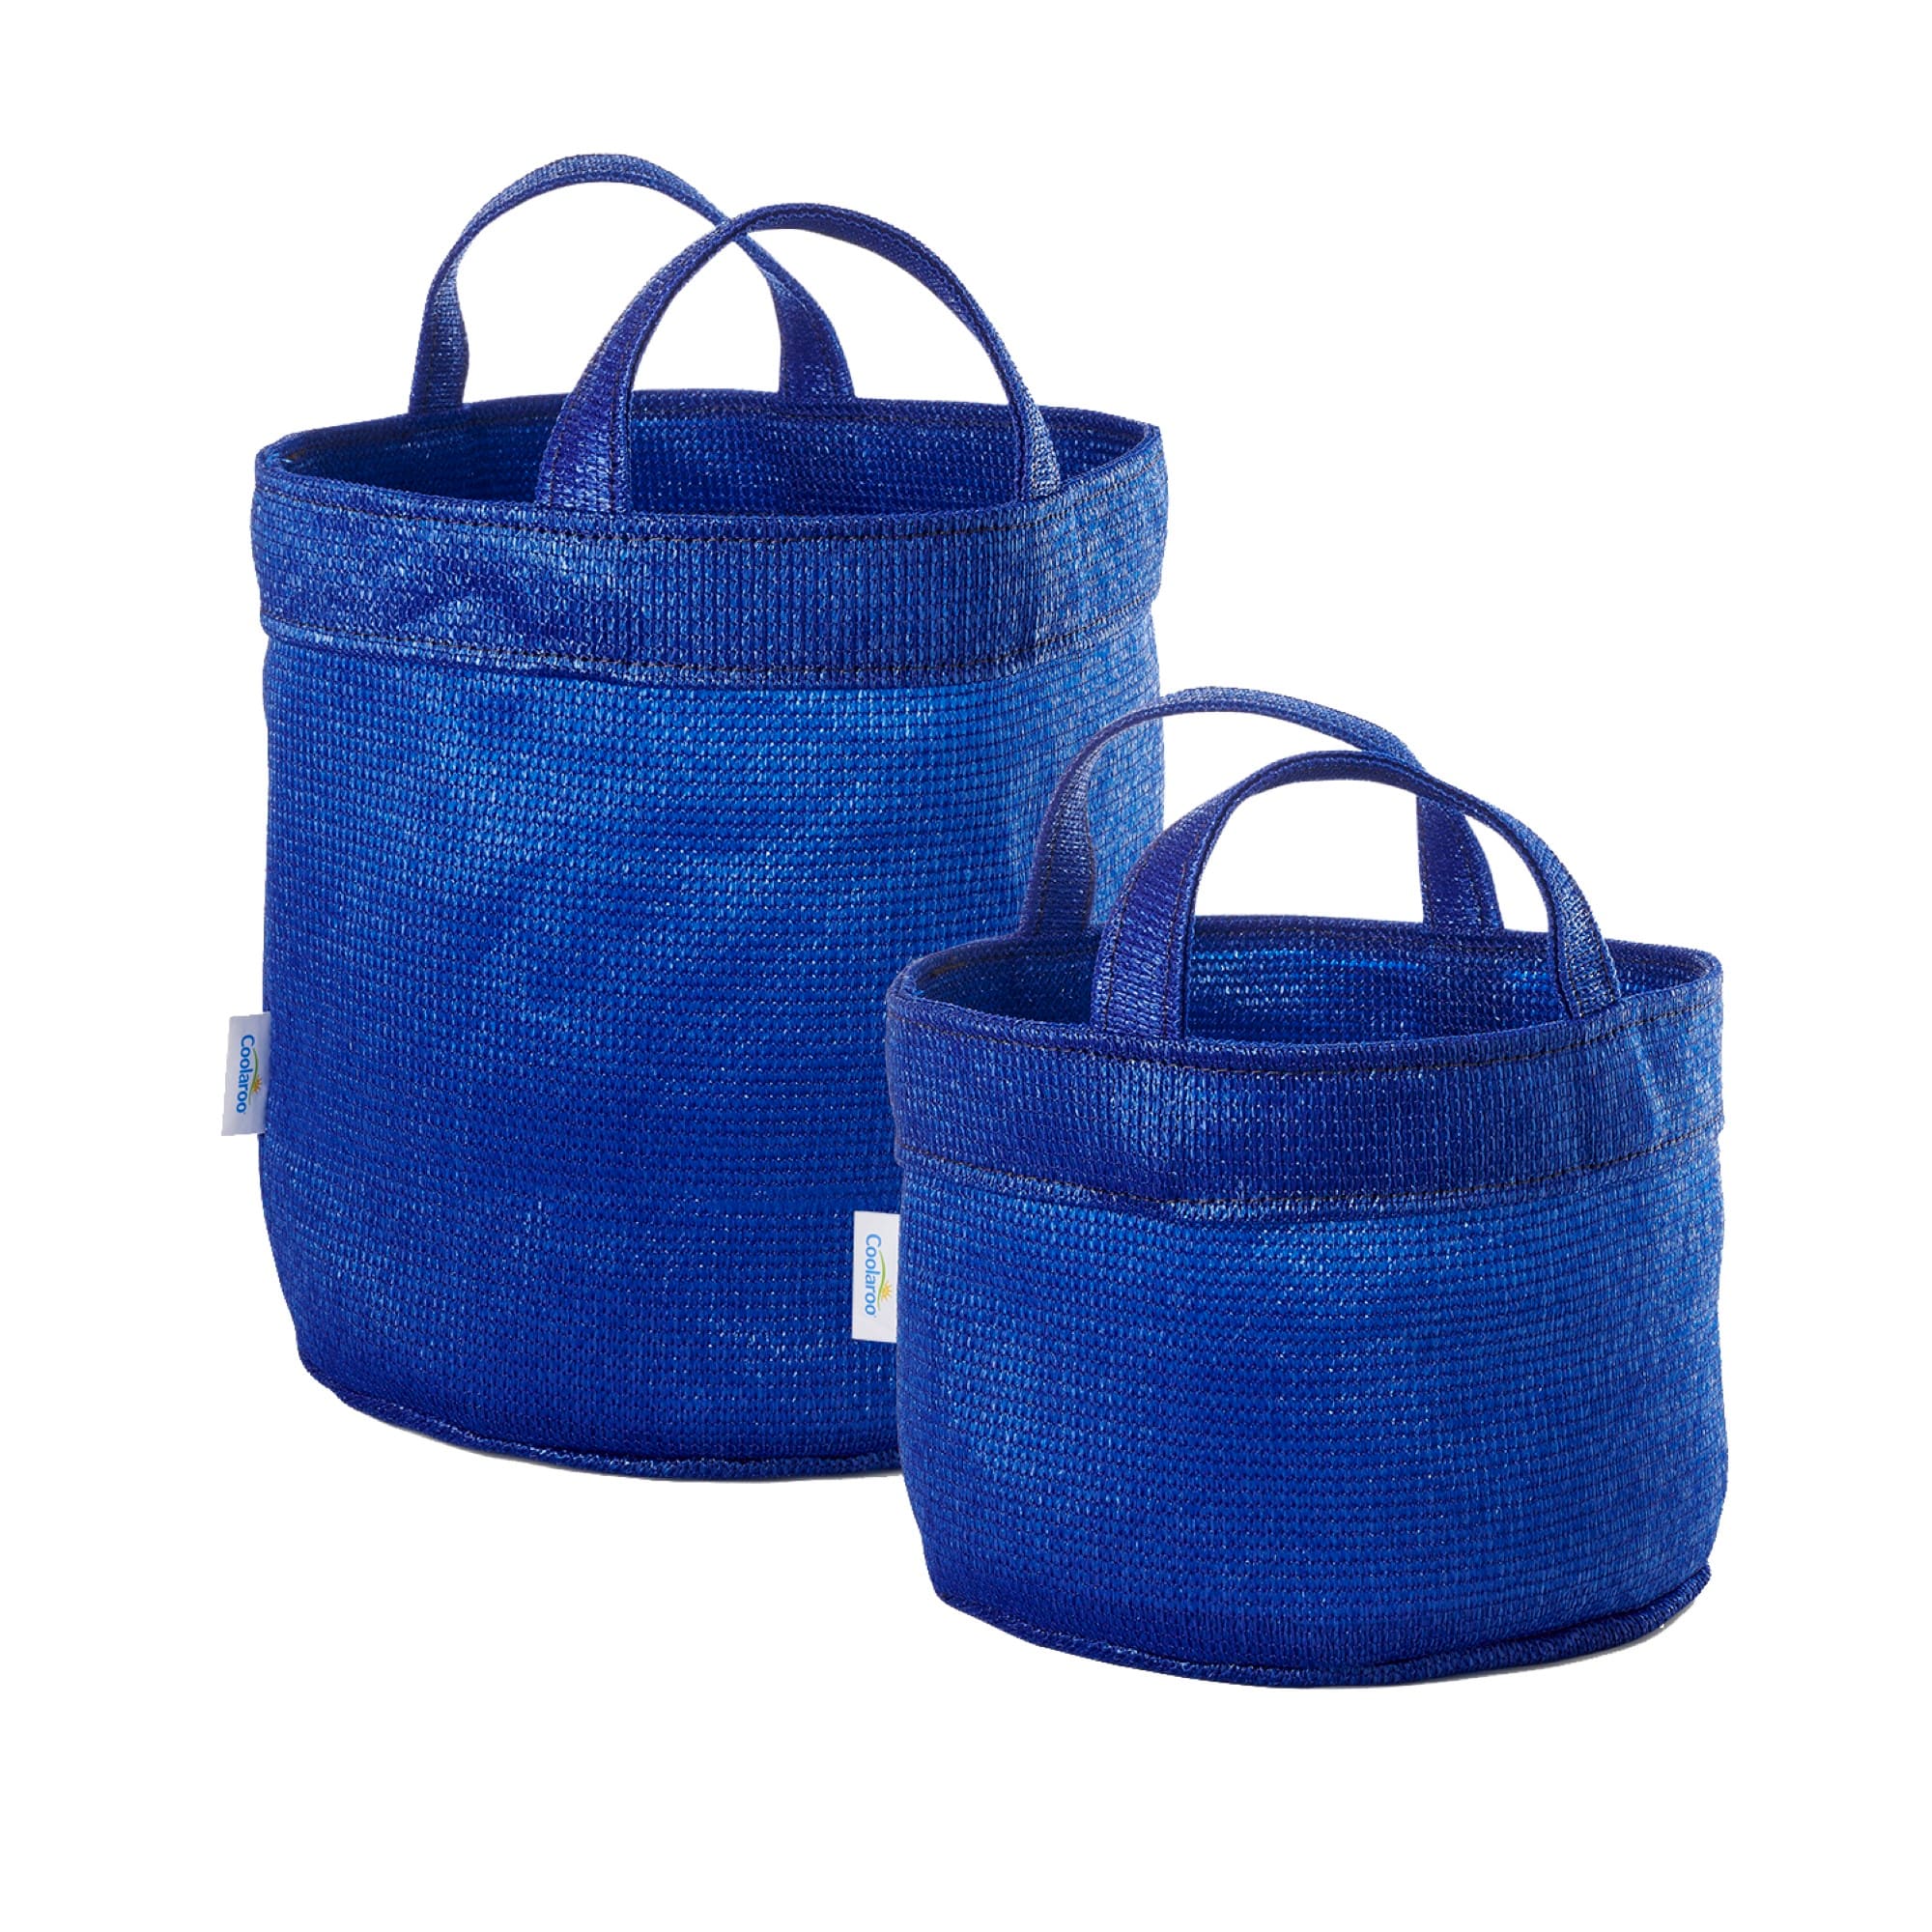 Coolaroo Aquatic Blue Pet Bags, Medium/Large, Pack of 2